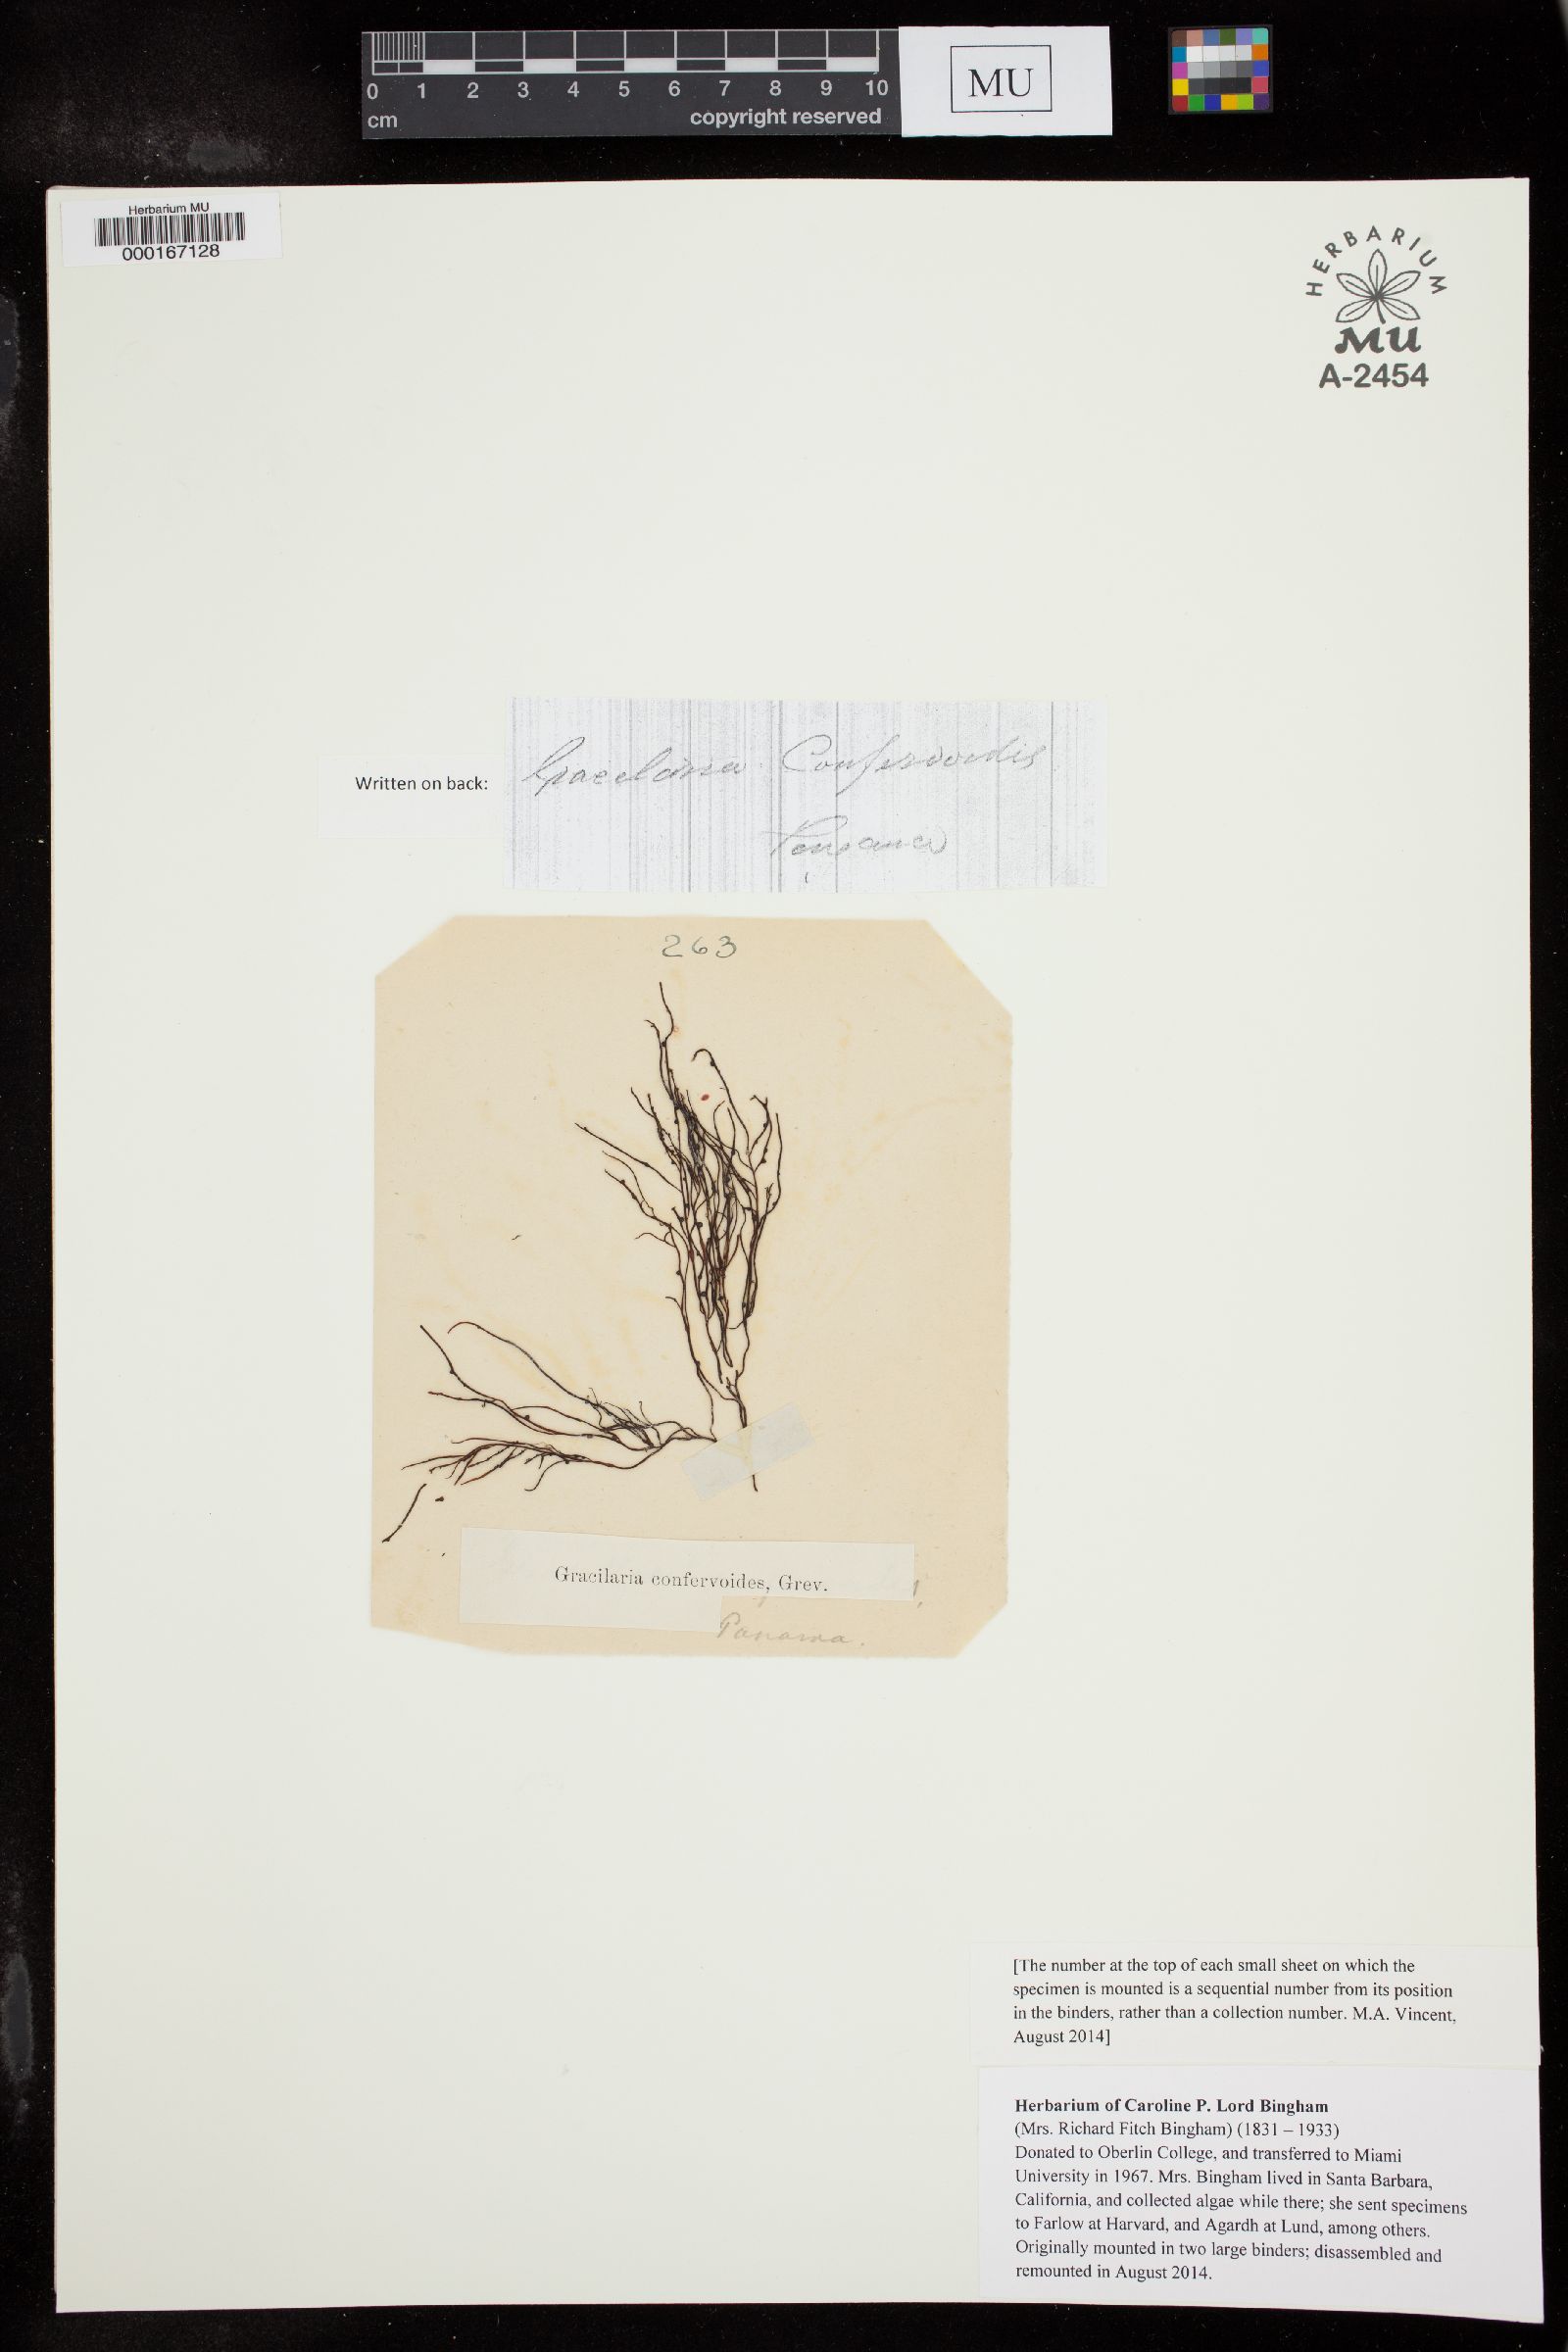 Gracilariopsis image